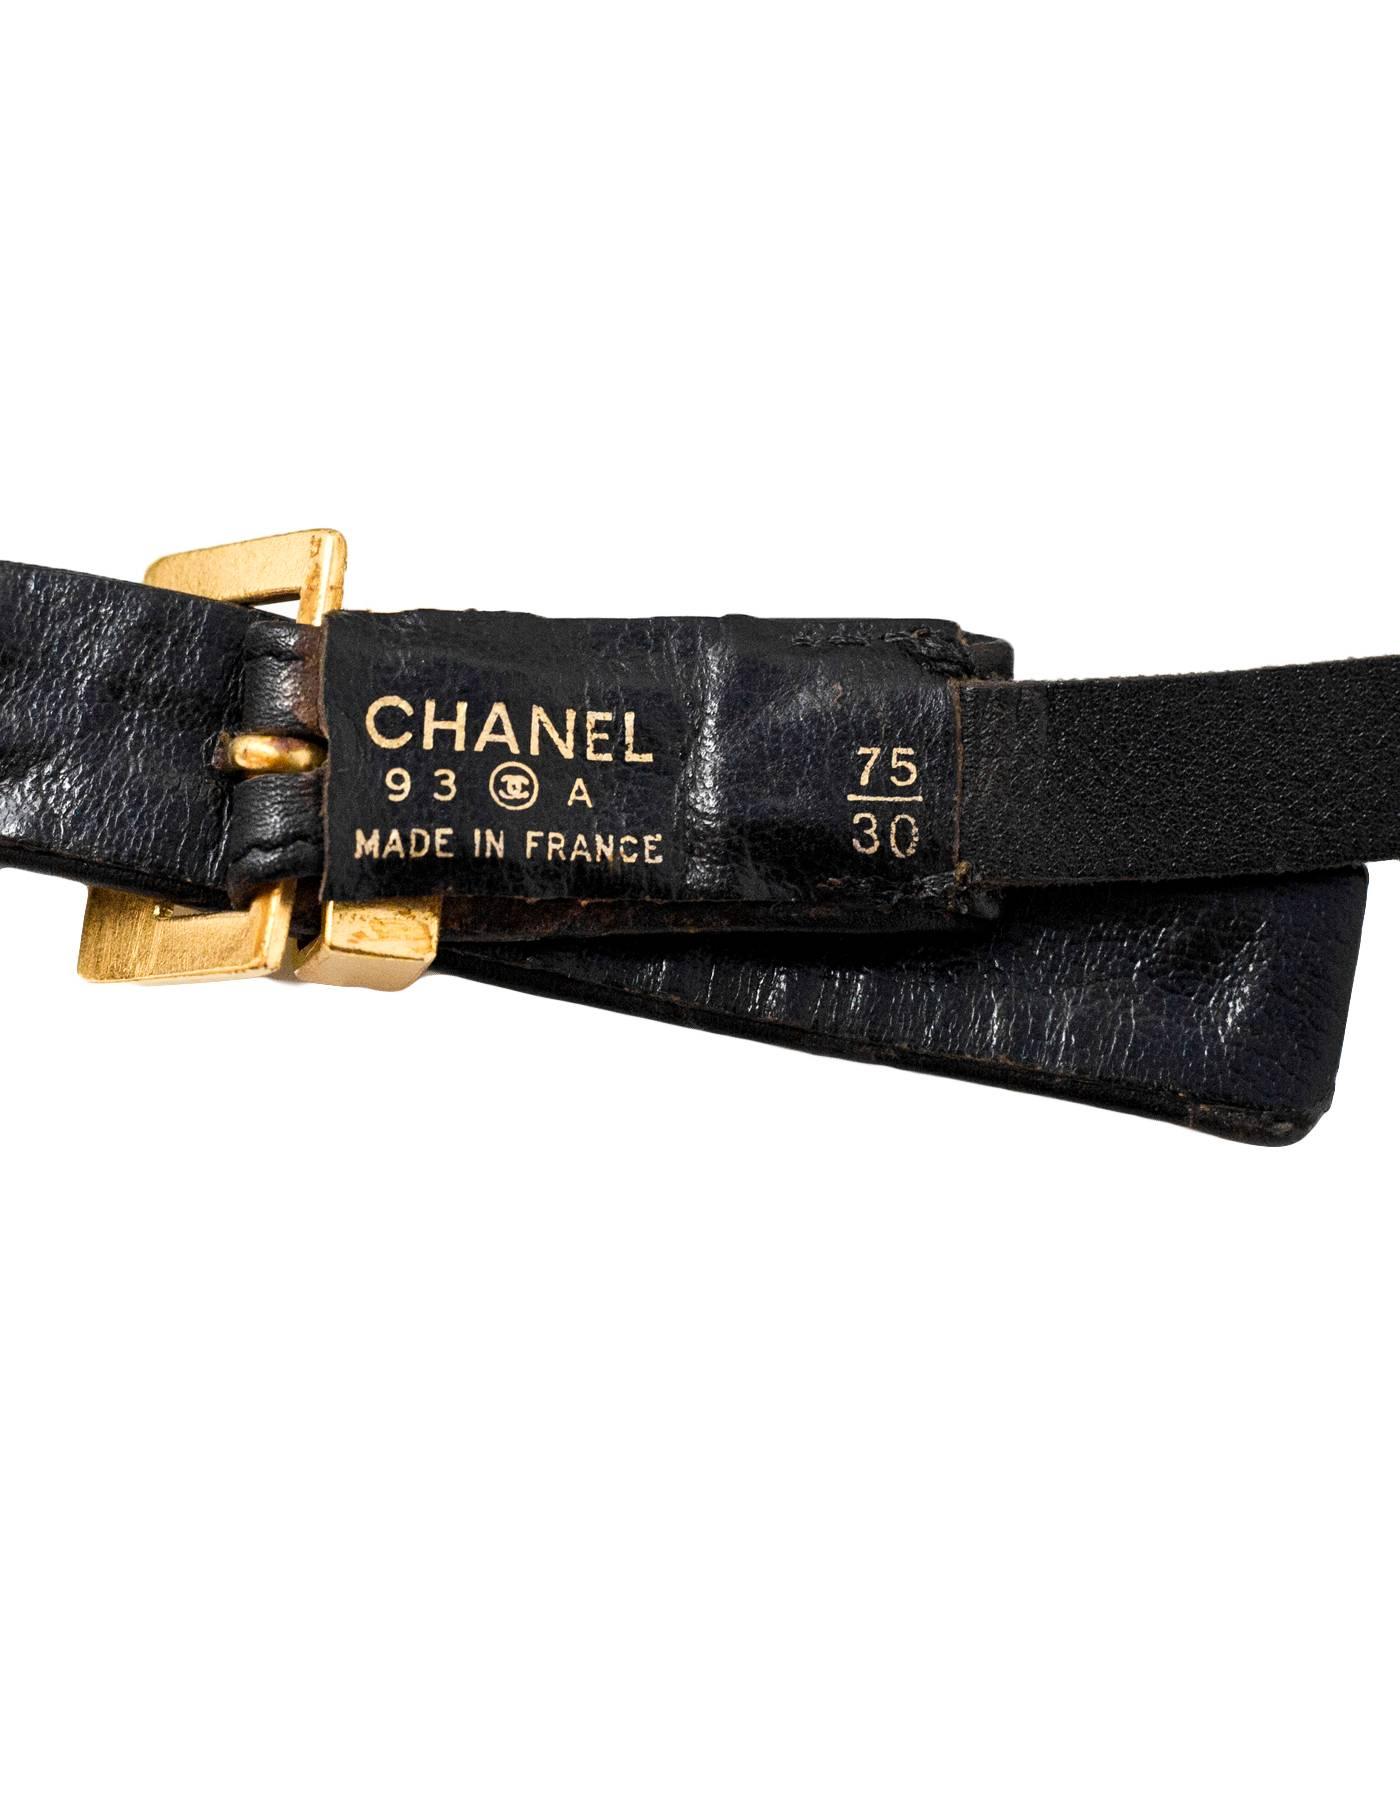 Chanel Vintage '93 Black Leather Woven Chain Link Belt sz 75 1